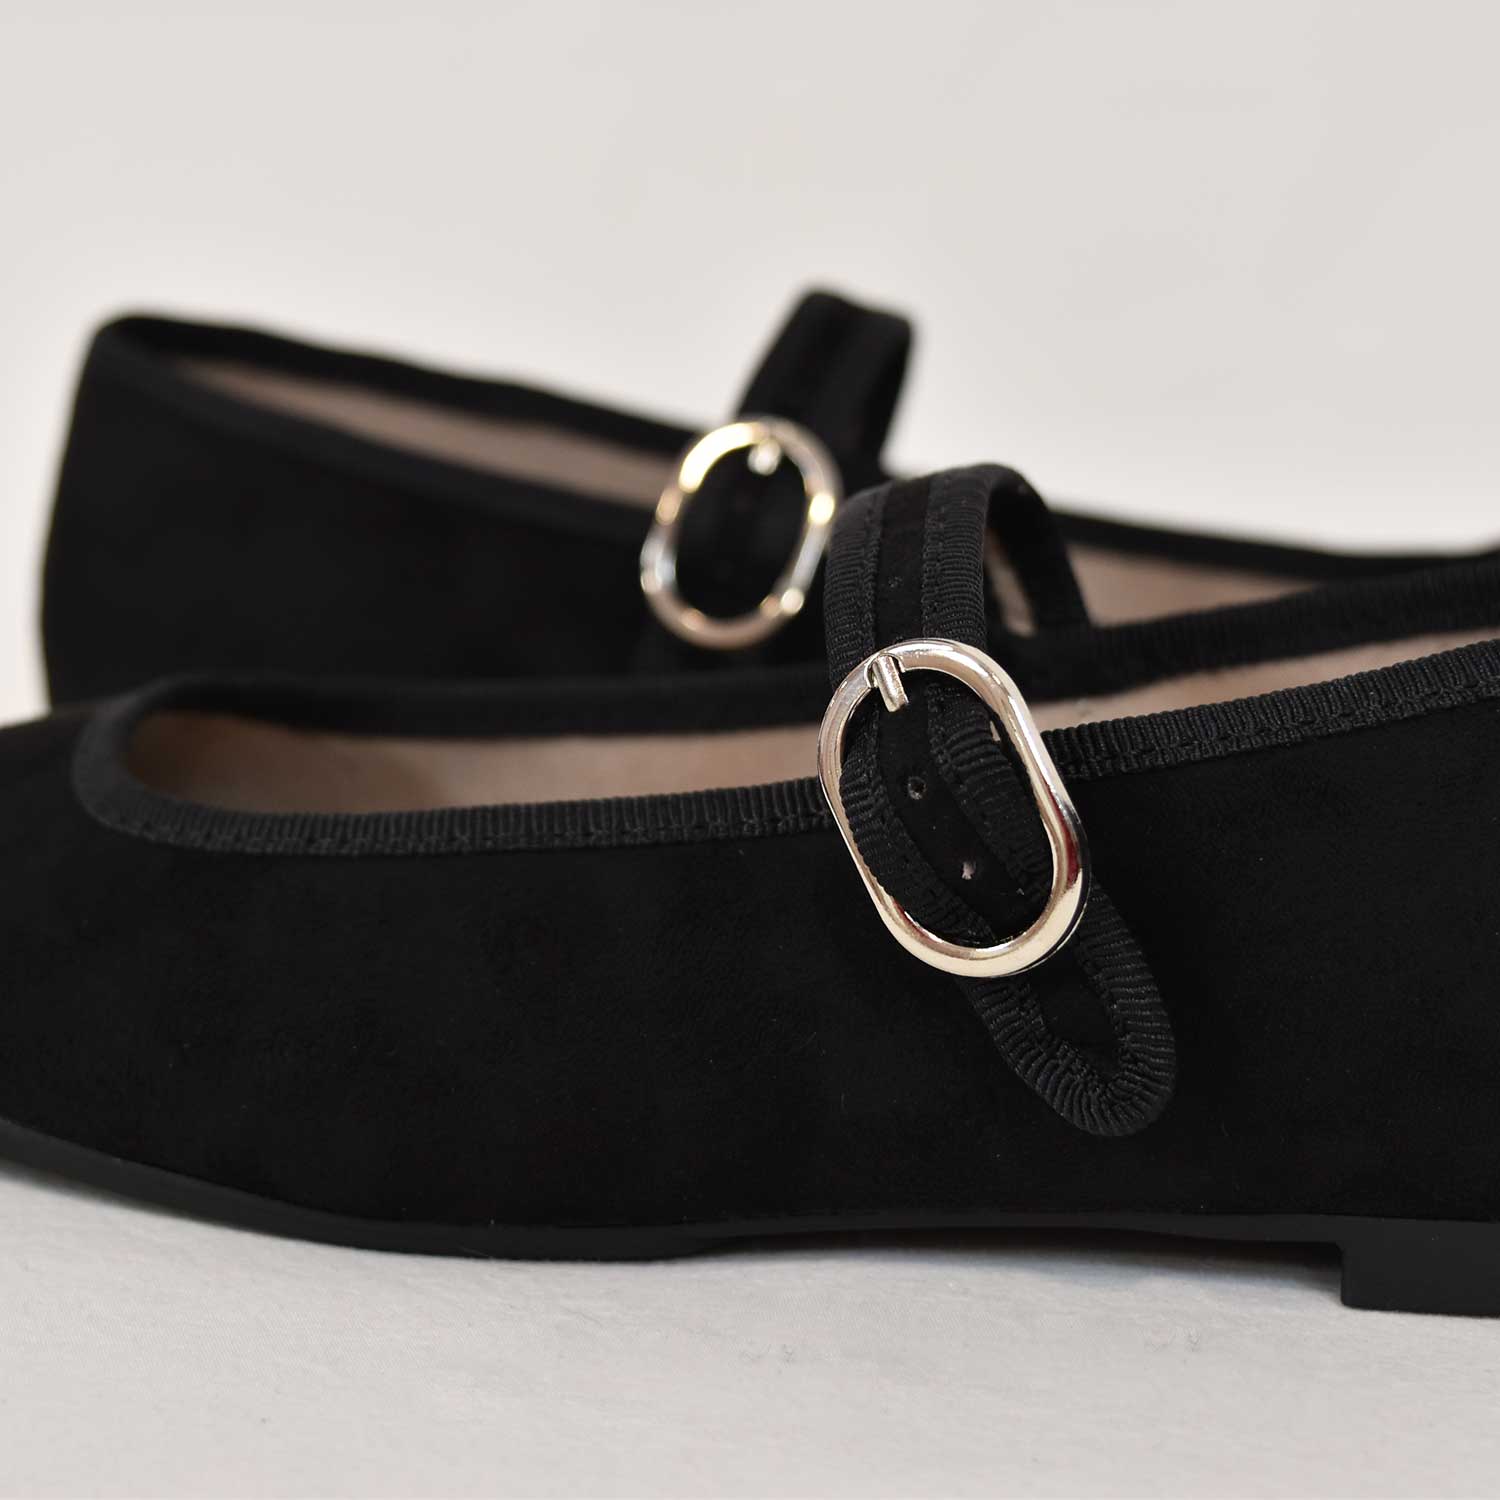 Black Mary Jane shoes